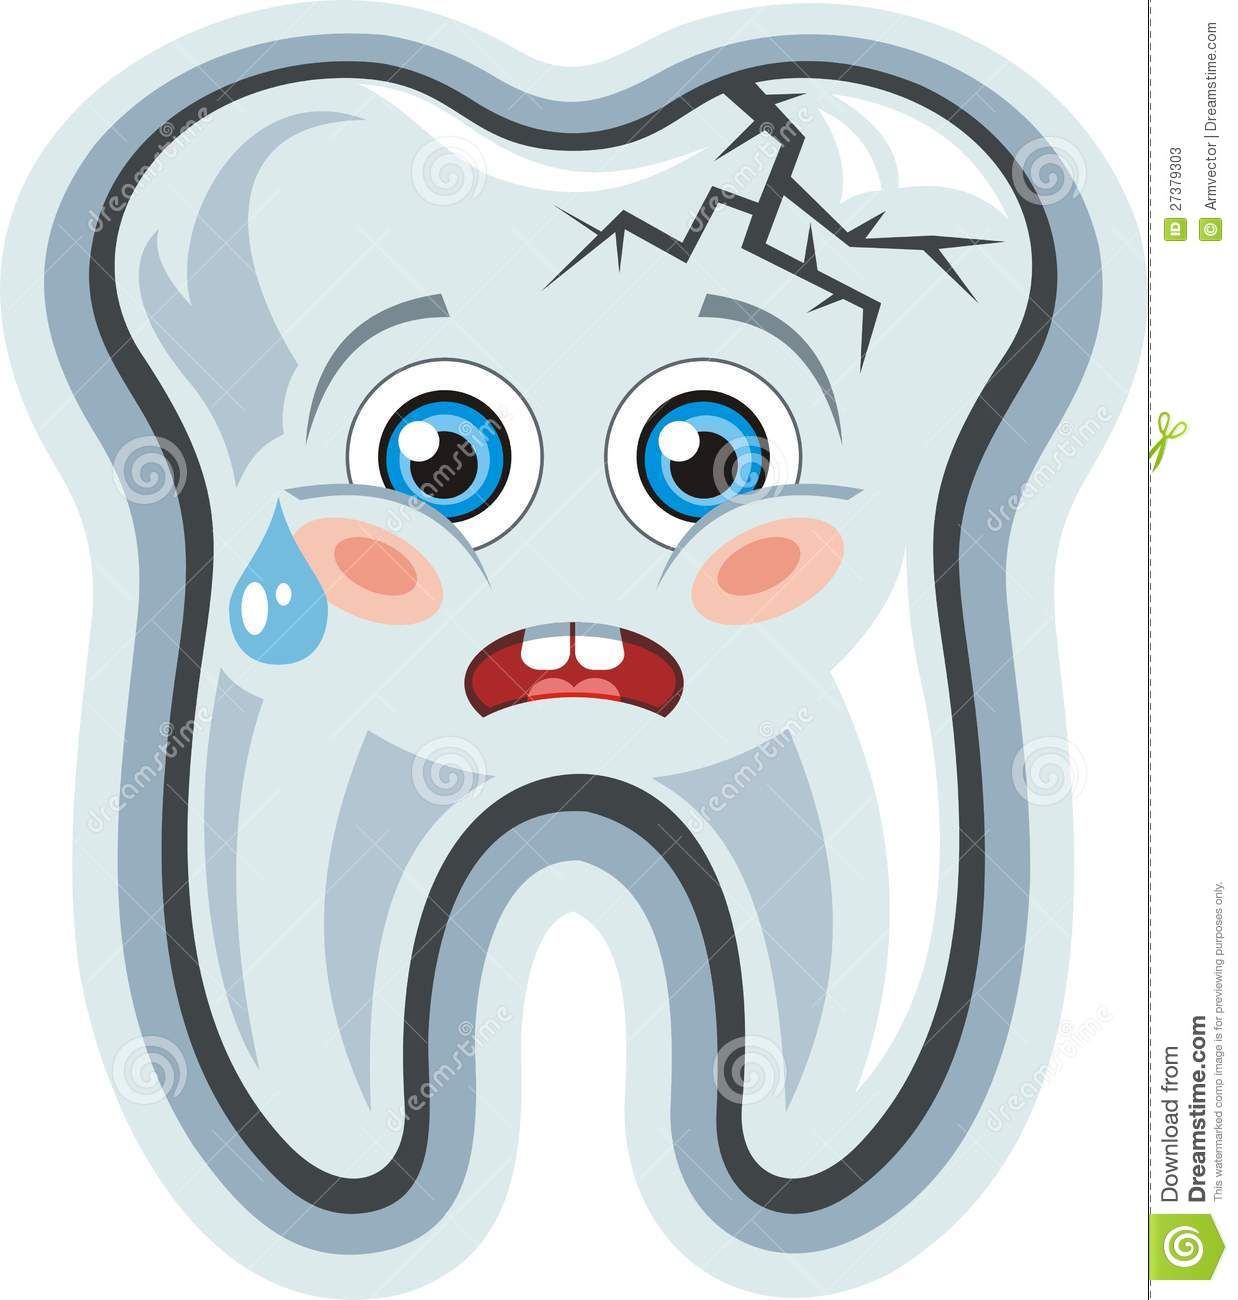 Bad teeth clipart collection - rekasurvey